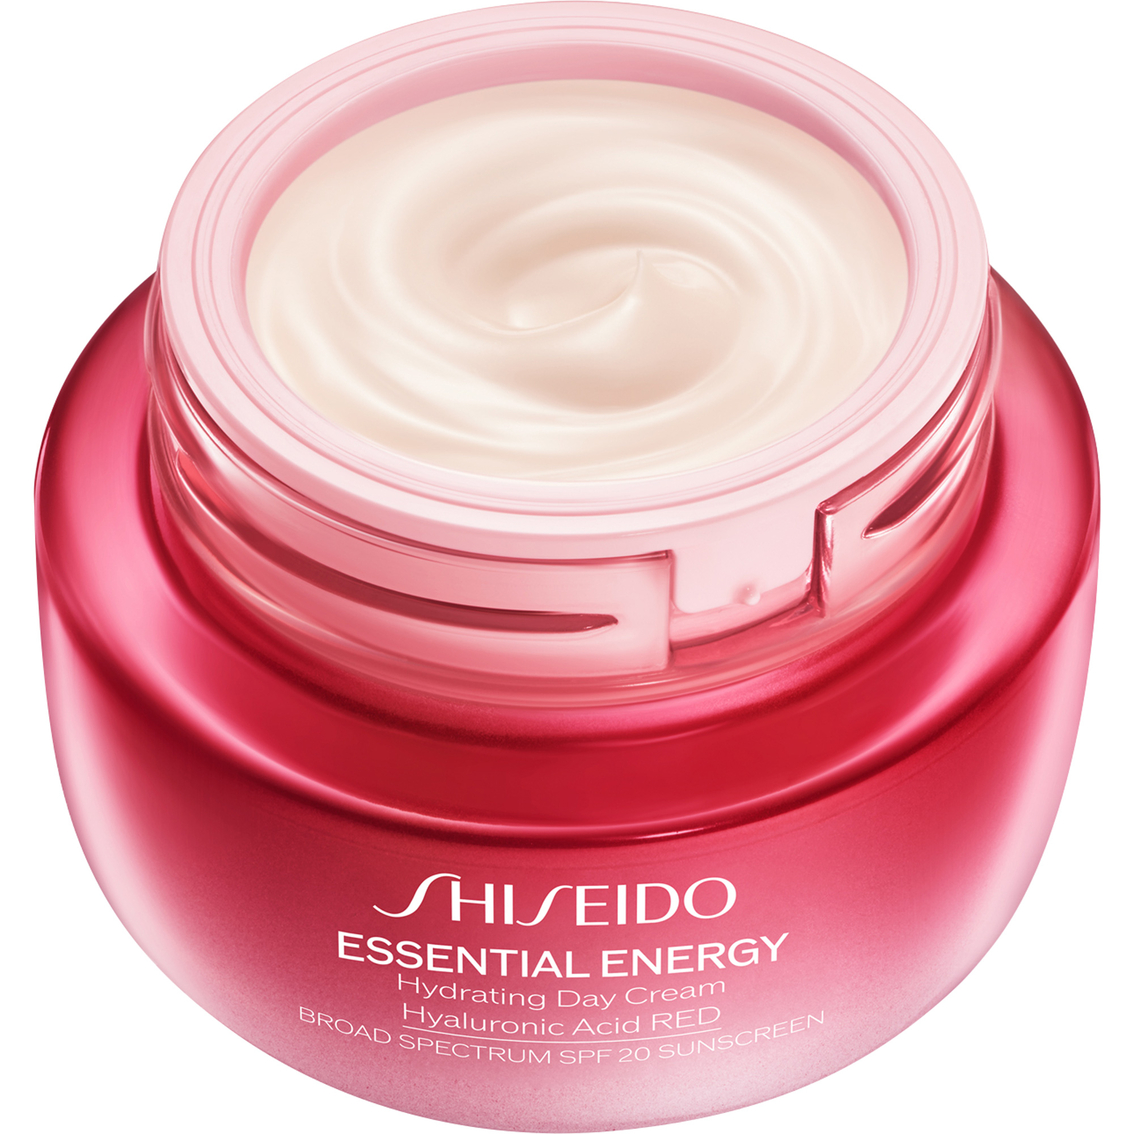 Shiseido Essential Energy Hydrating Day Cream Broad Spectrum SPF 20 - Image 2 of 3